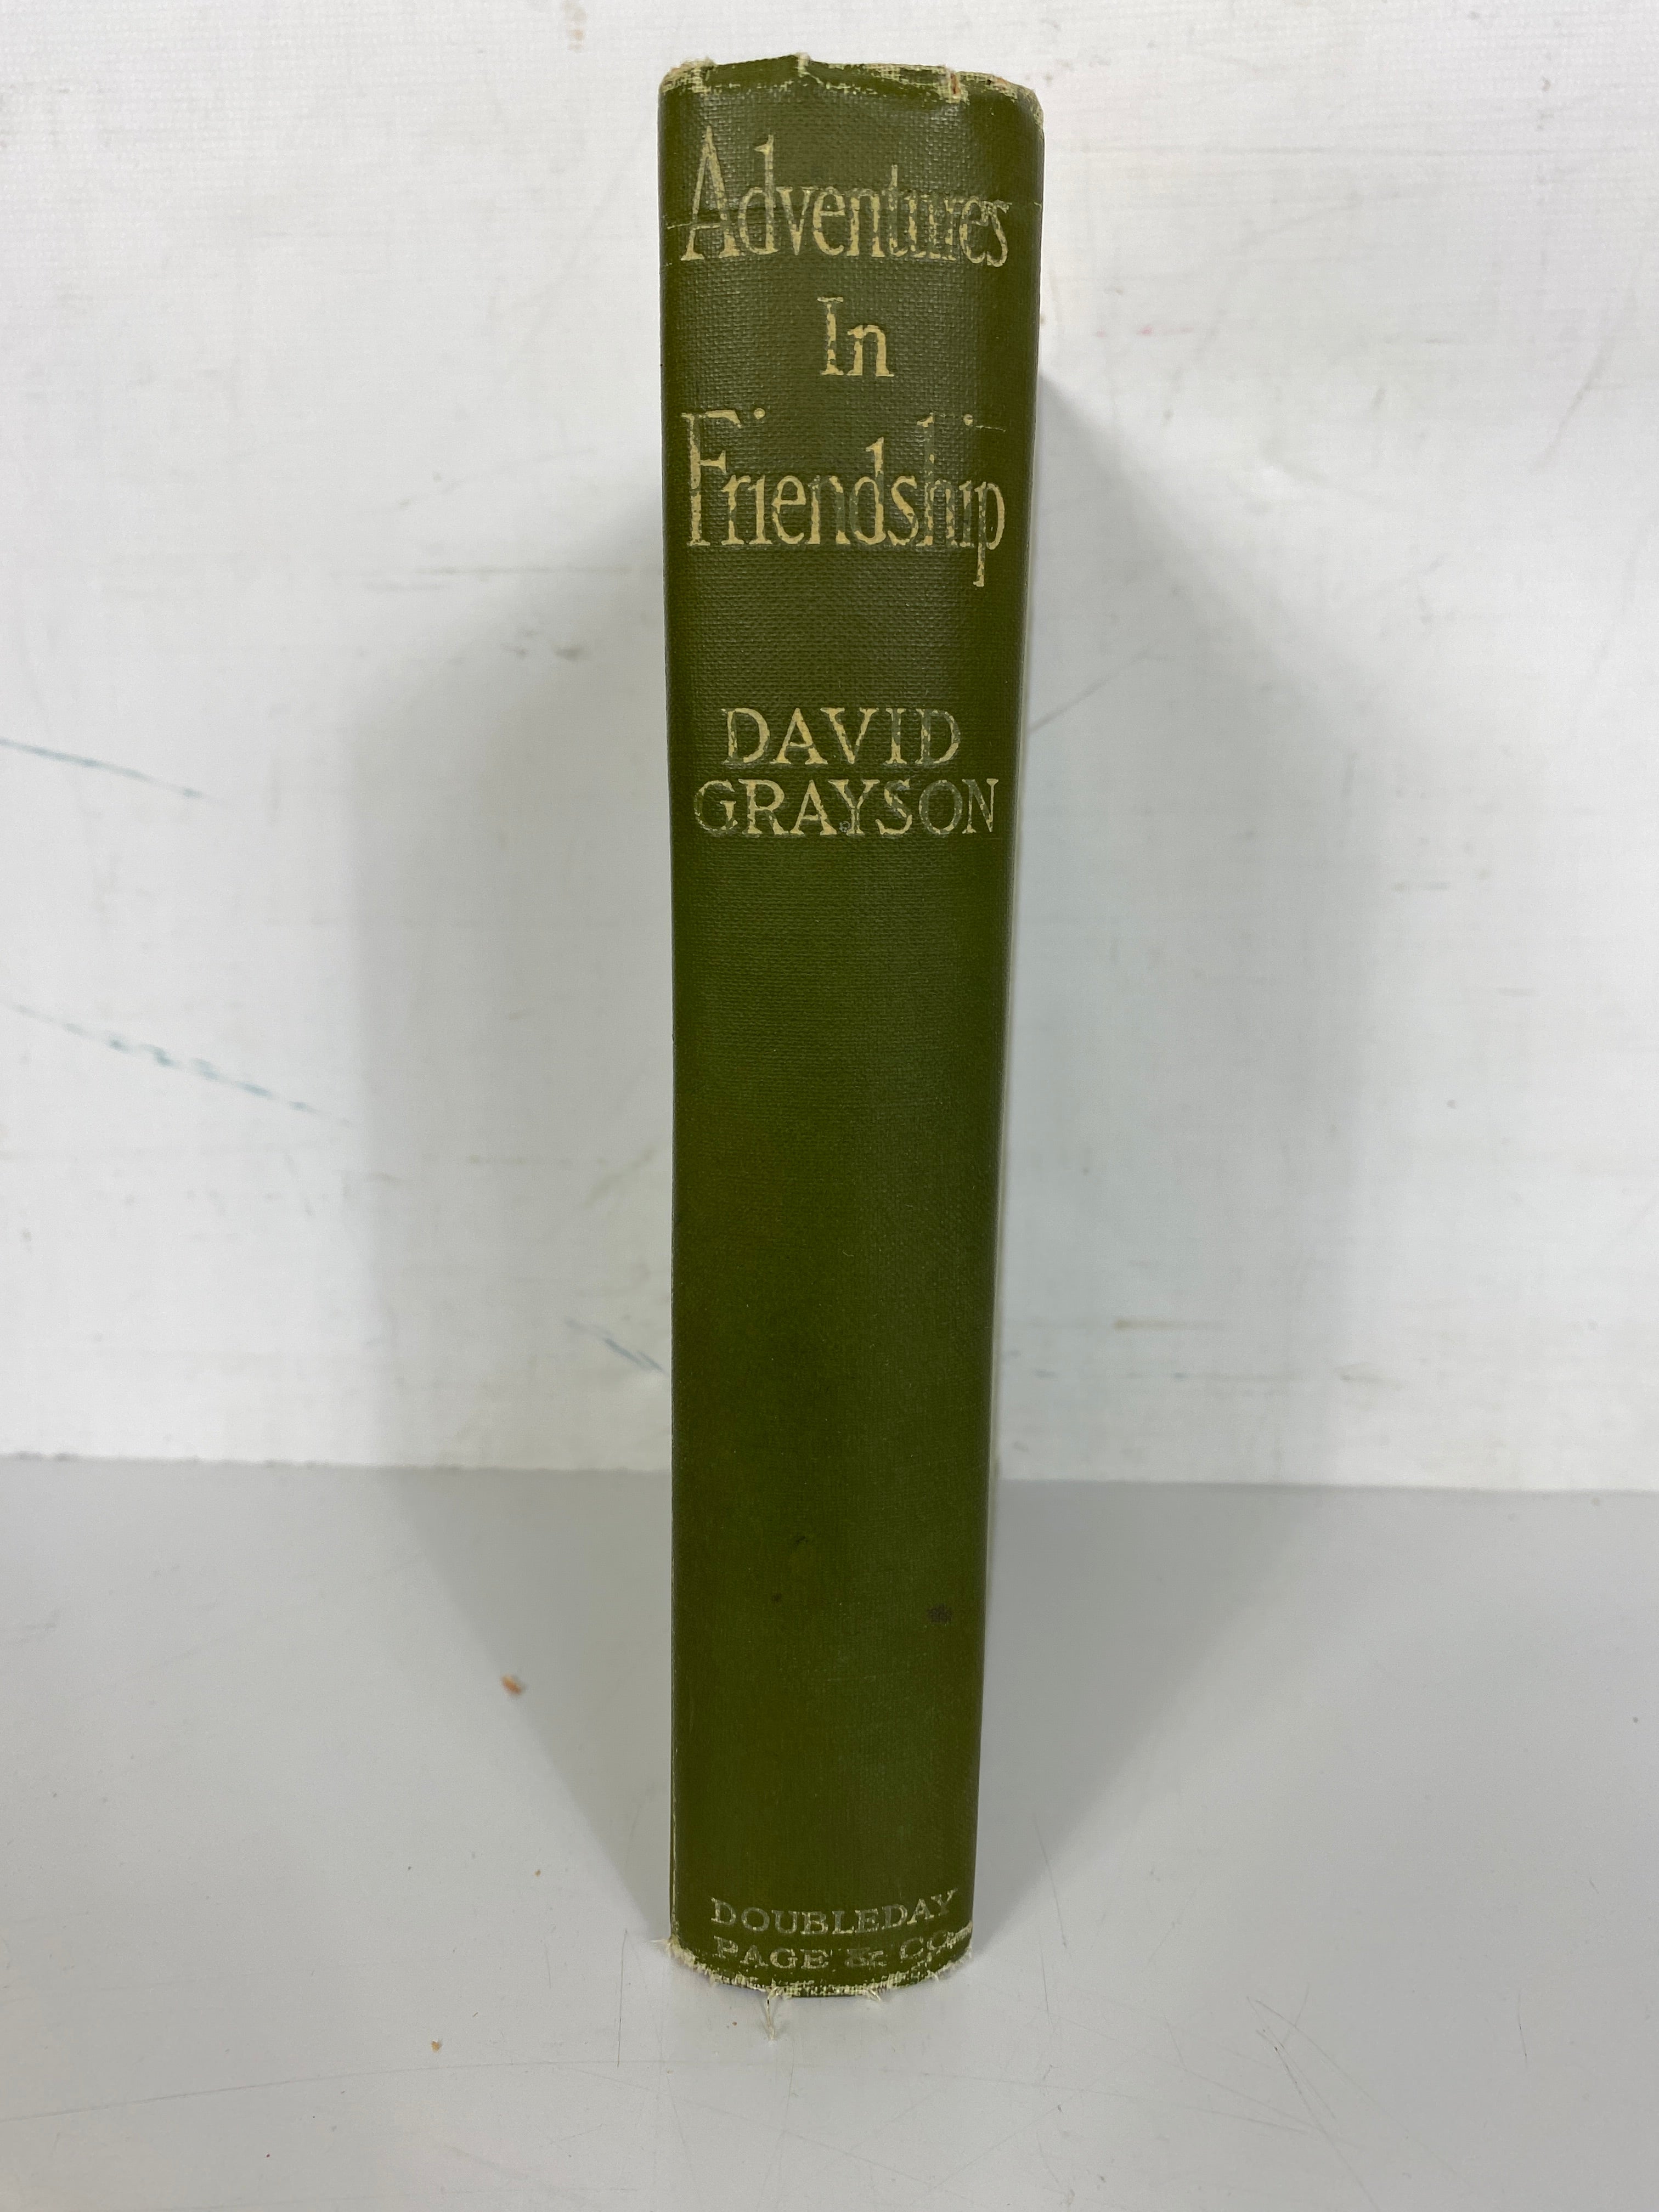 Lot of 3 David Grayson Novels 1910-1915 HC